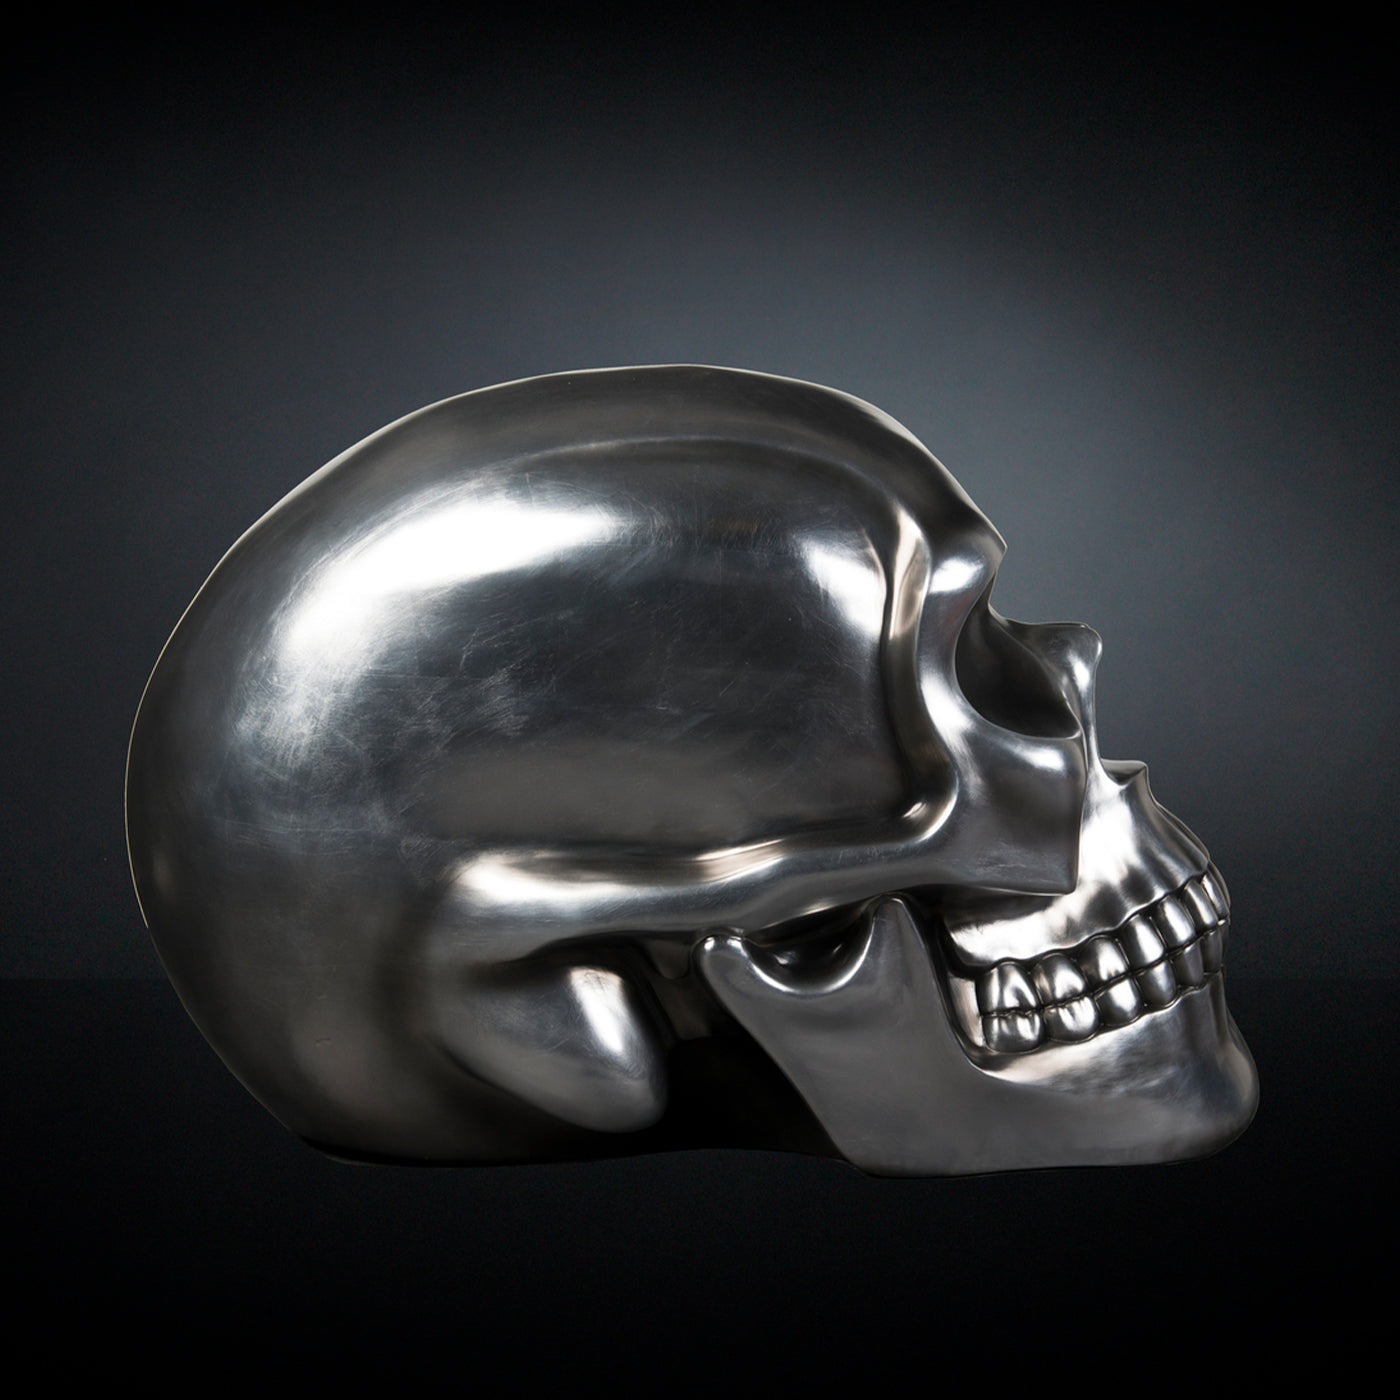 Black and Silver Skull Sculpture - Alternative view 2